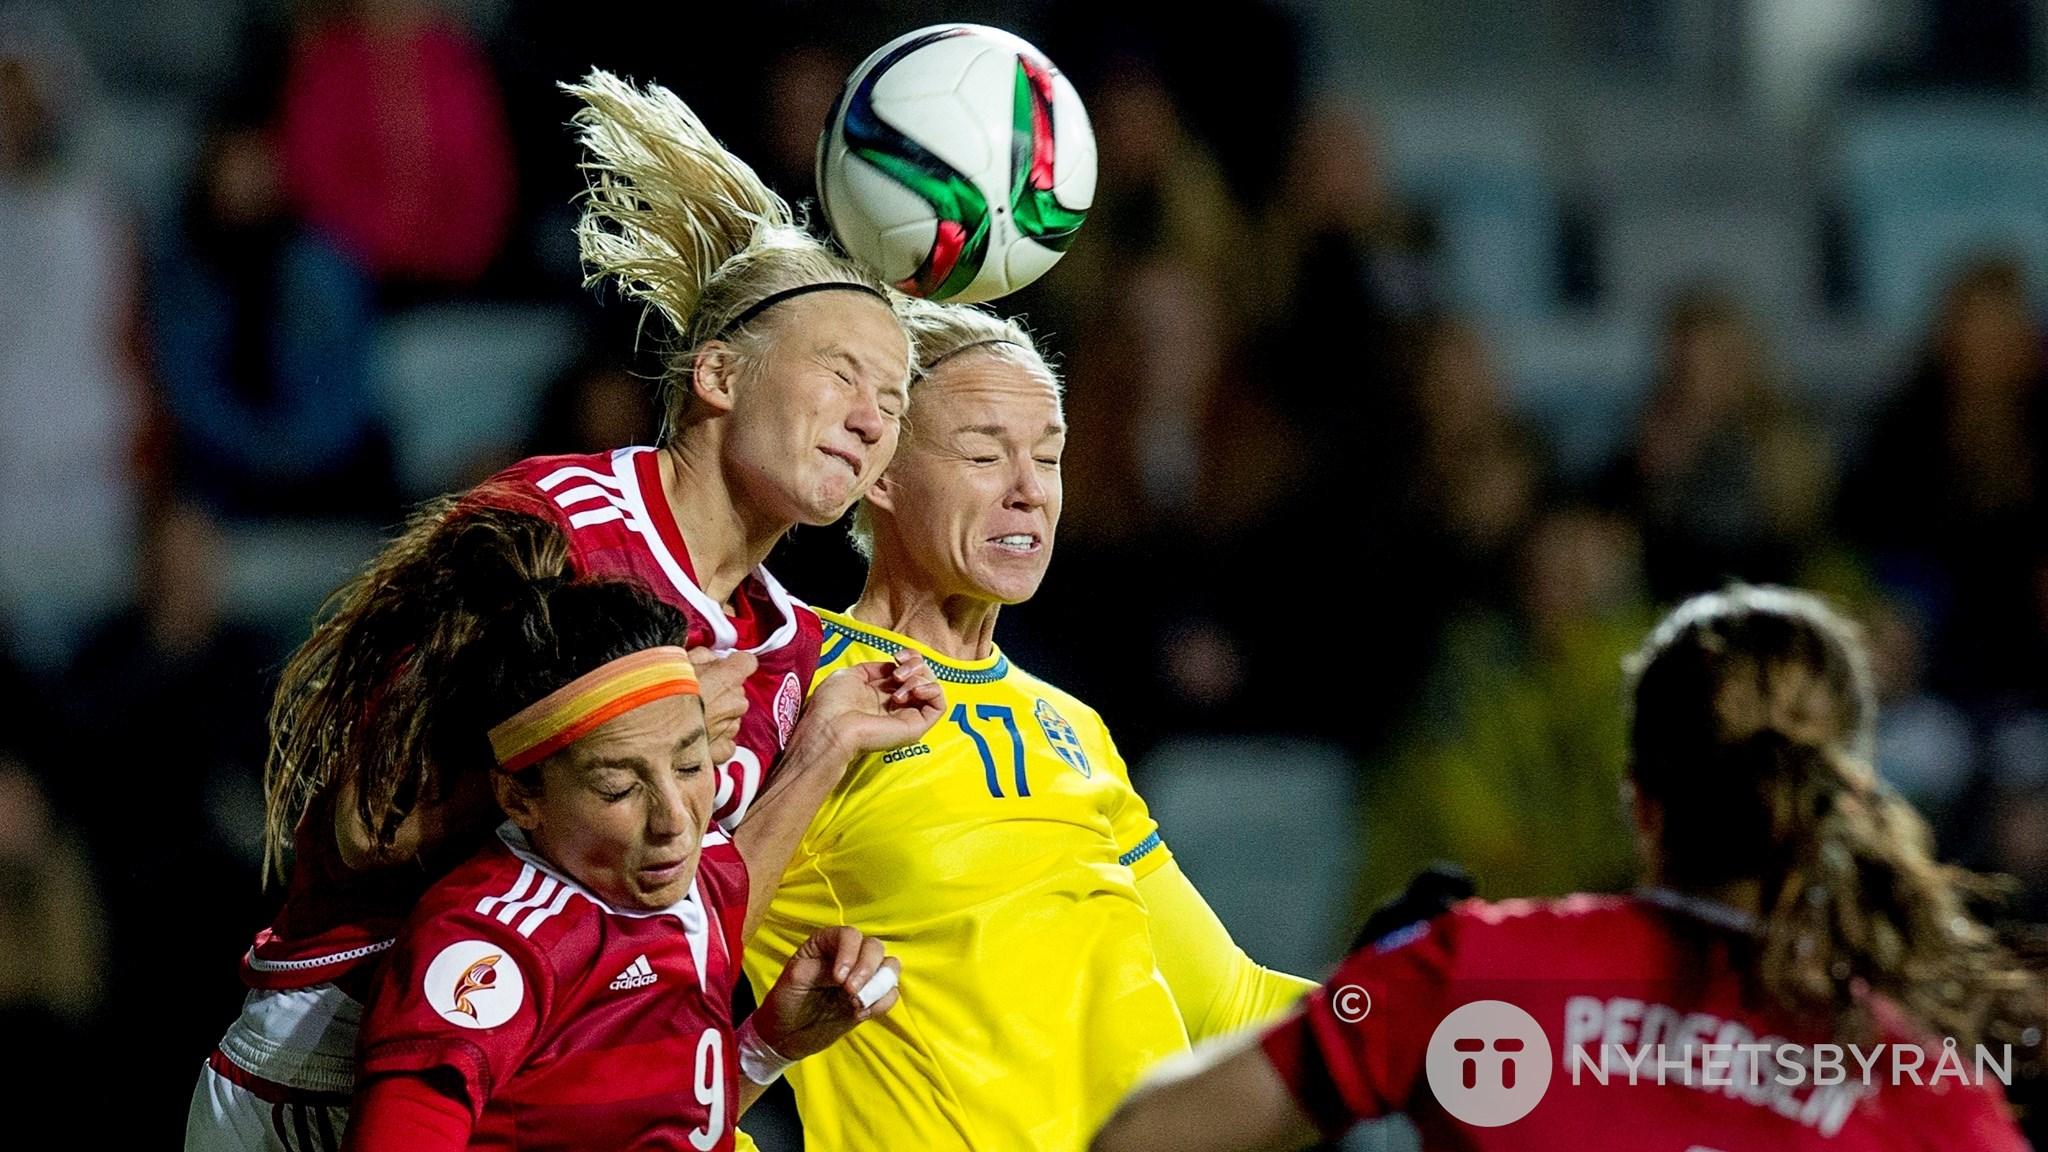 Labor dispute threatens Sweden's World Cup qualifier against Denmark